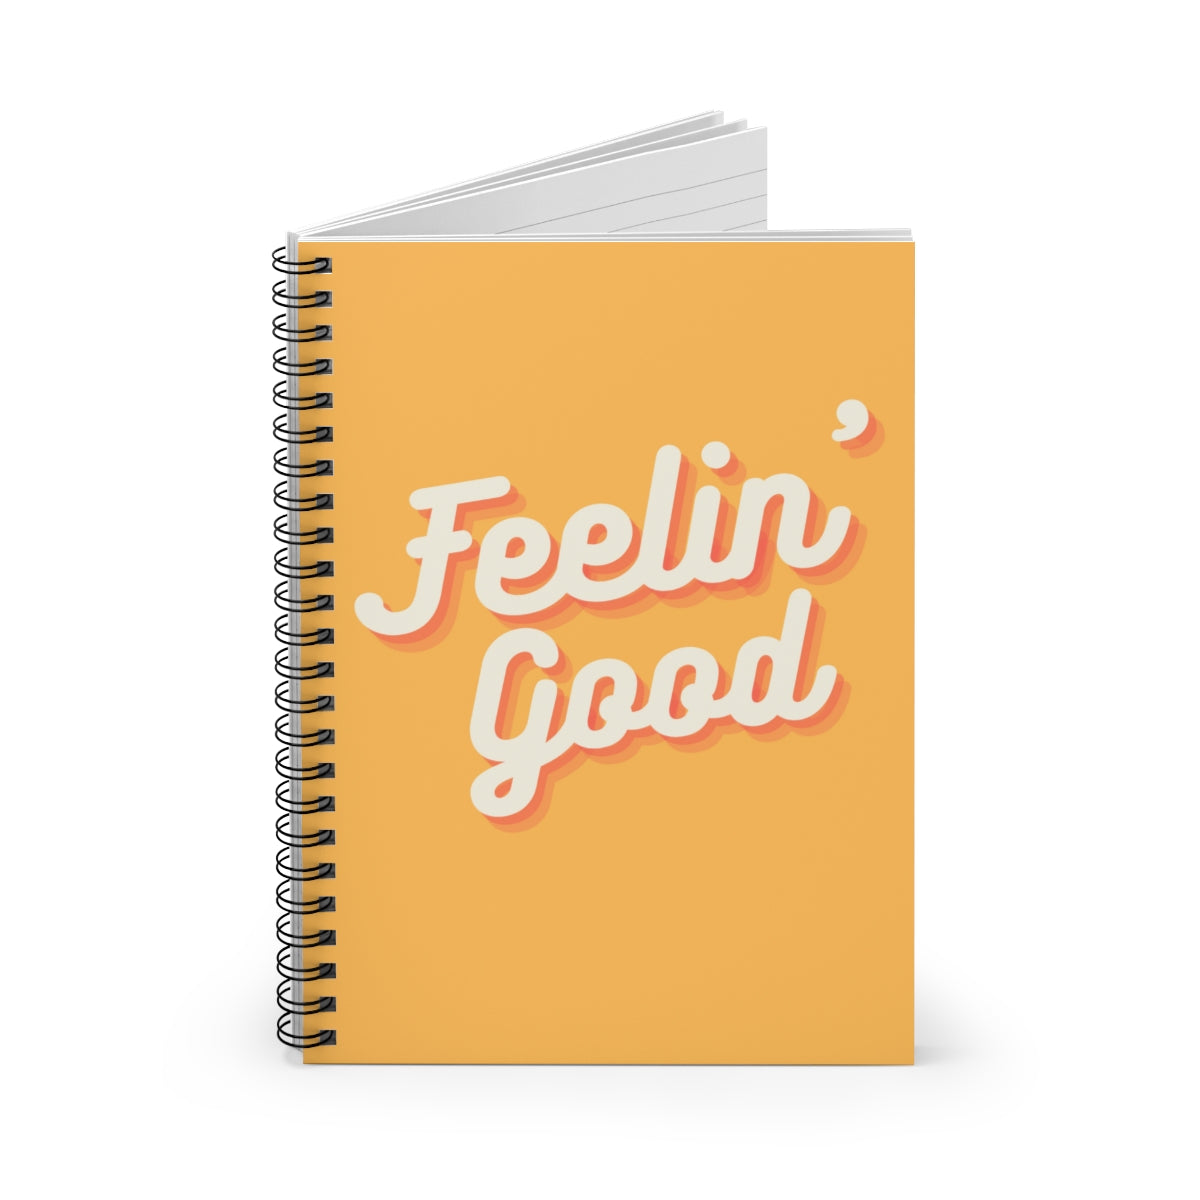 Feelin' Good Spiral Notebook - Ruled Line